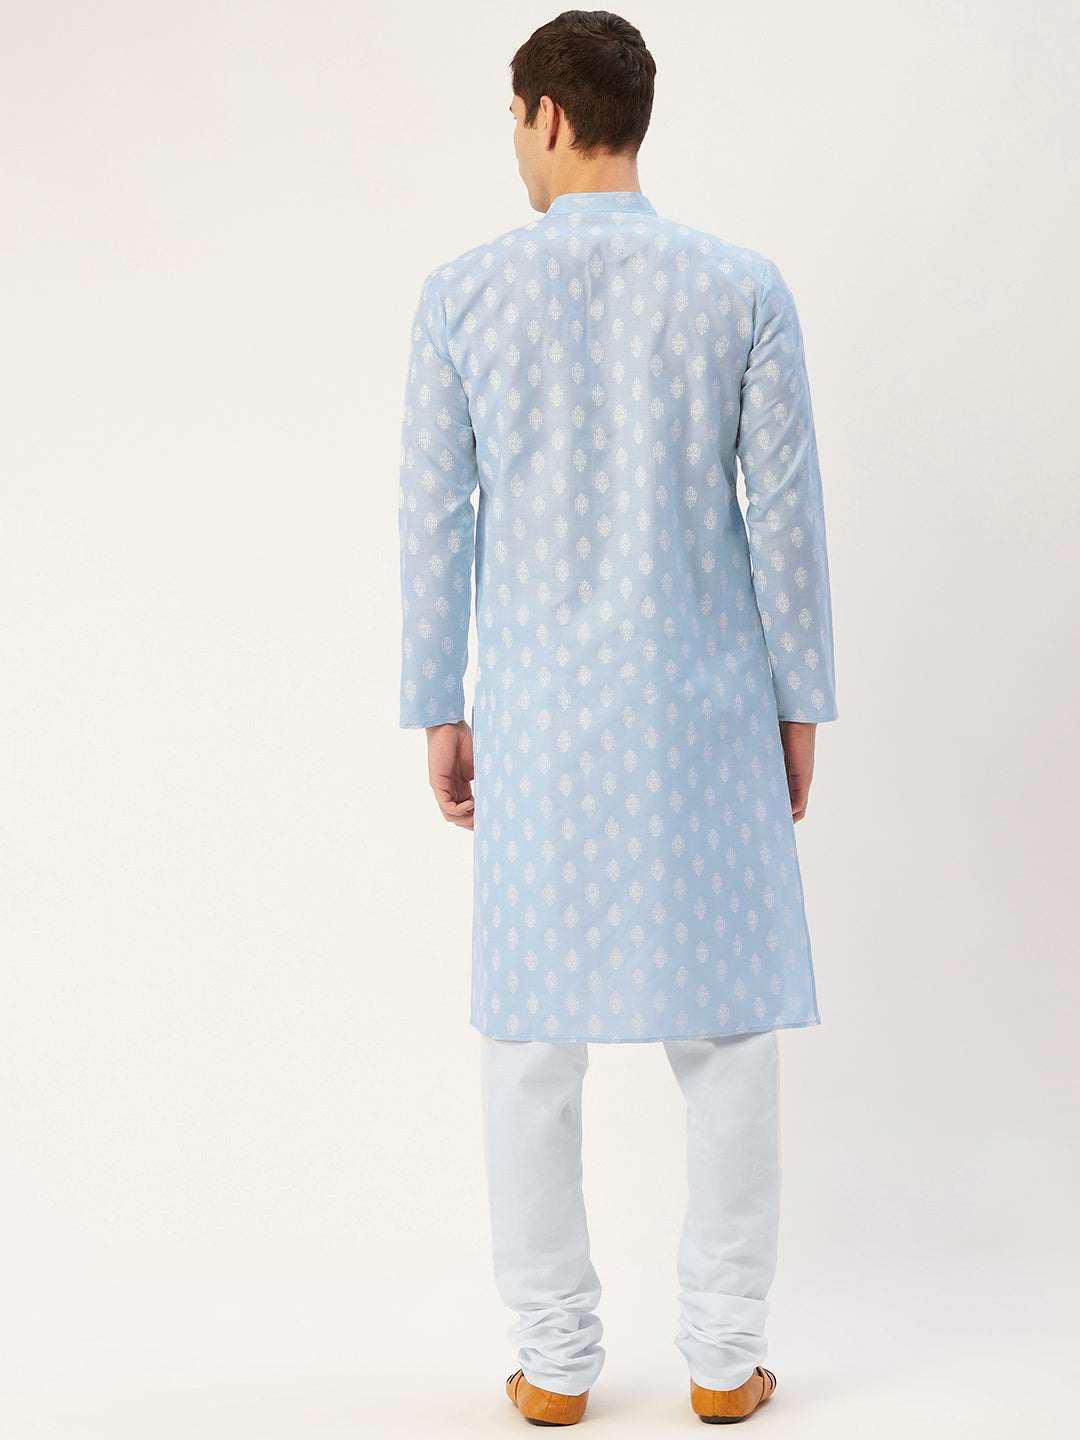 Jompers Men's Sky Cotton Floral Printed kurta Pyjama Set